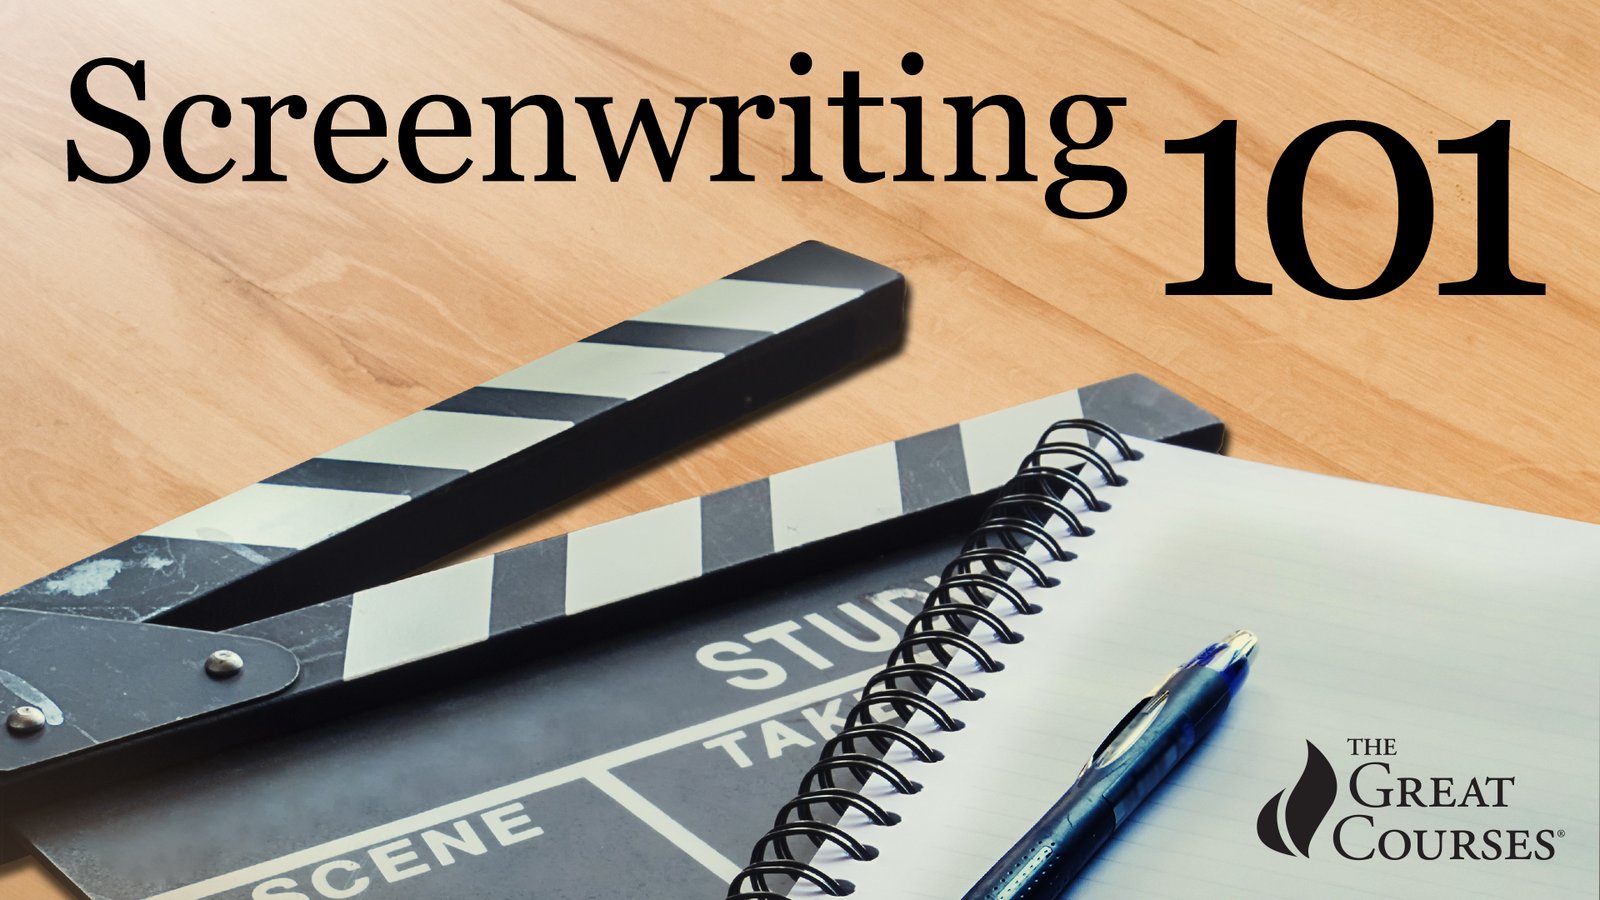 Screenwriting 101 - Mastering the Art of Story